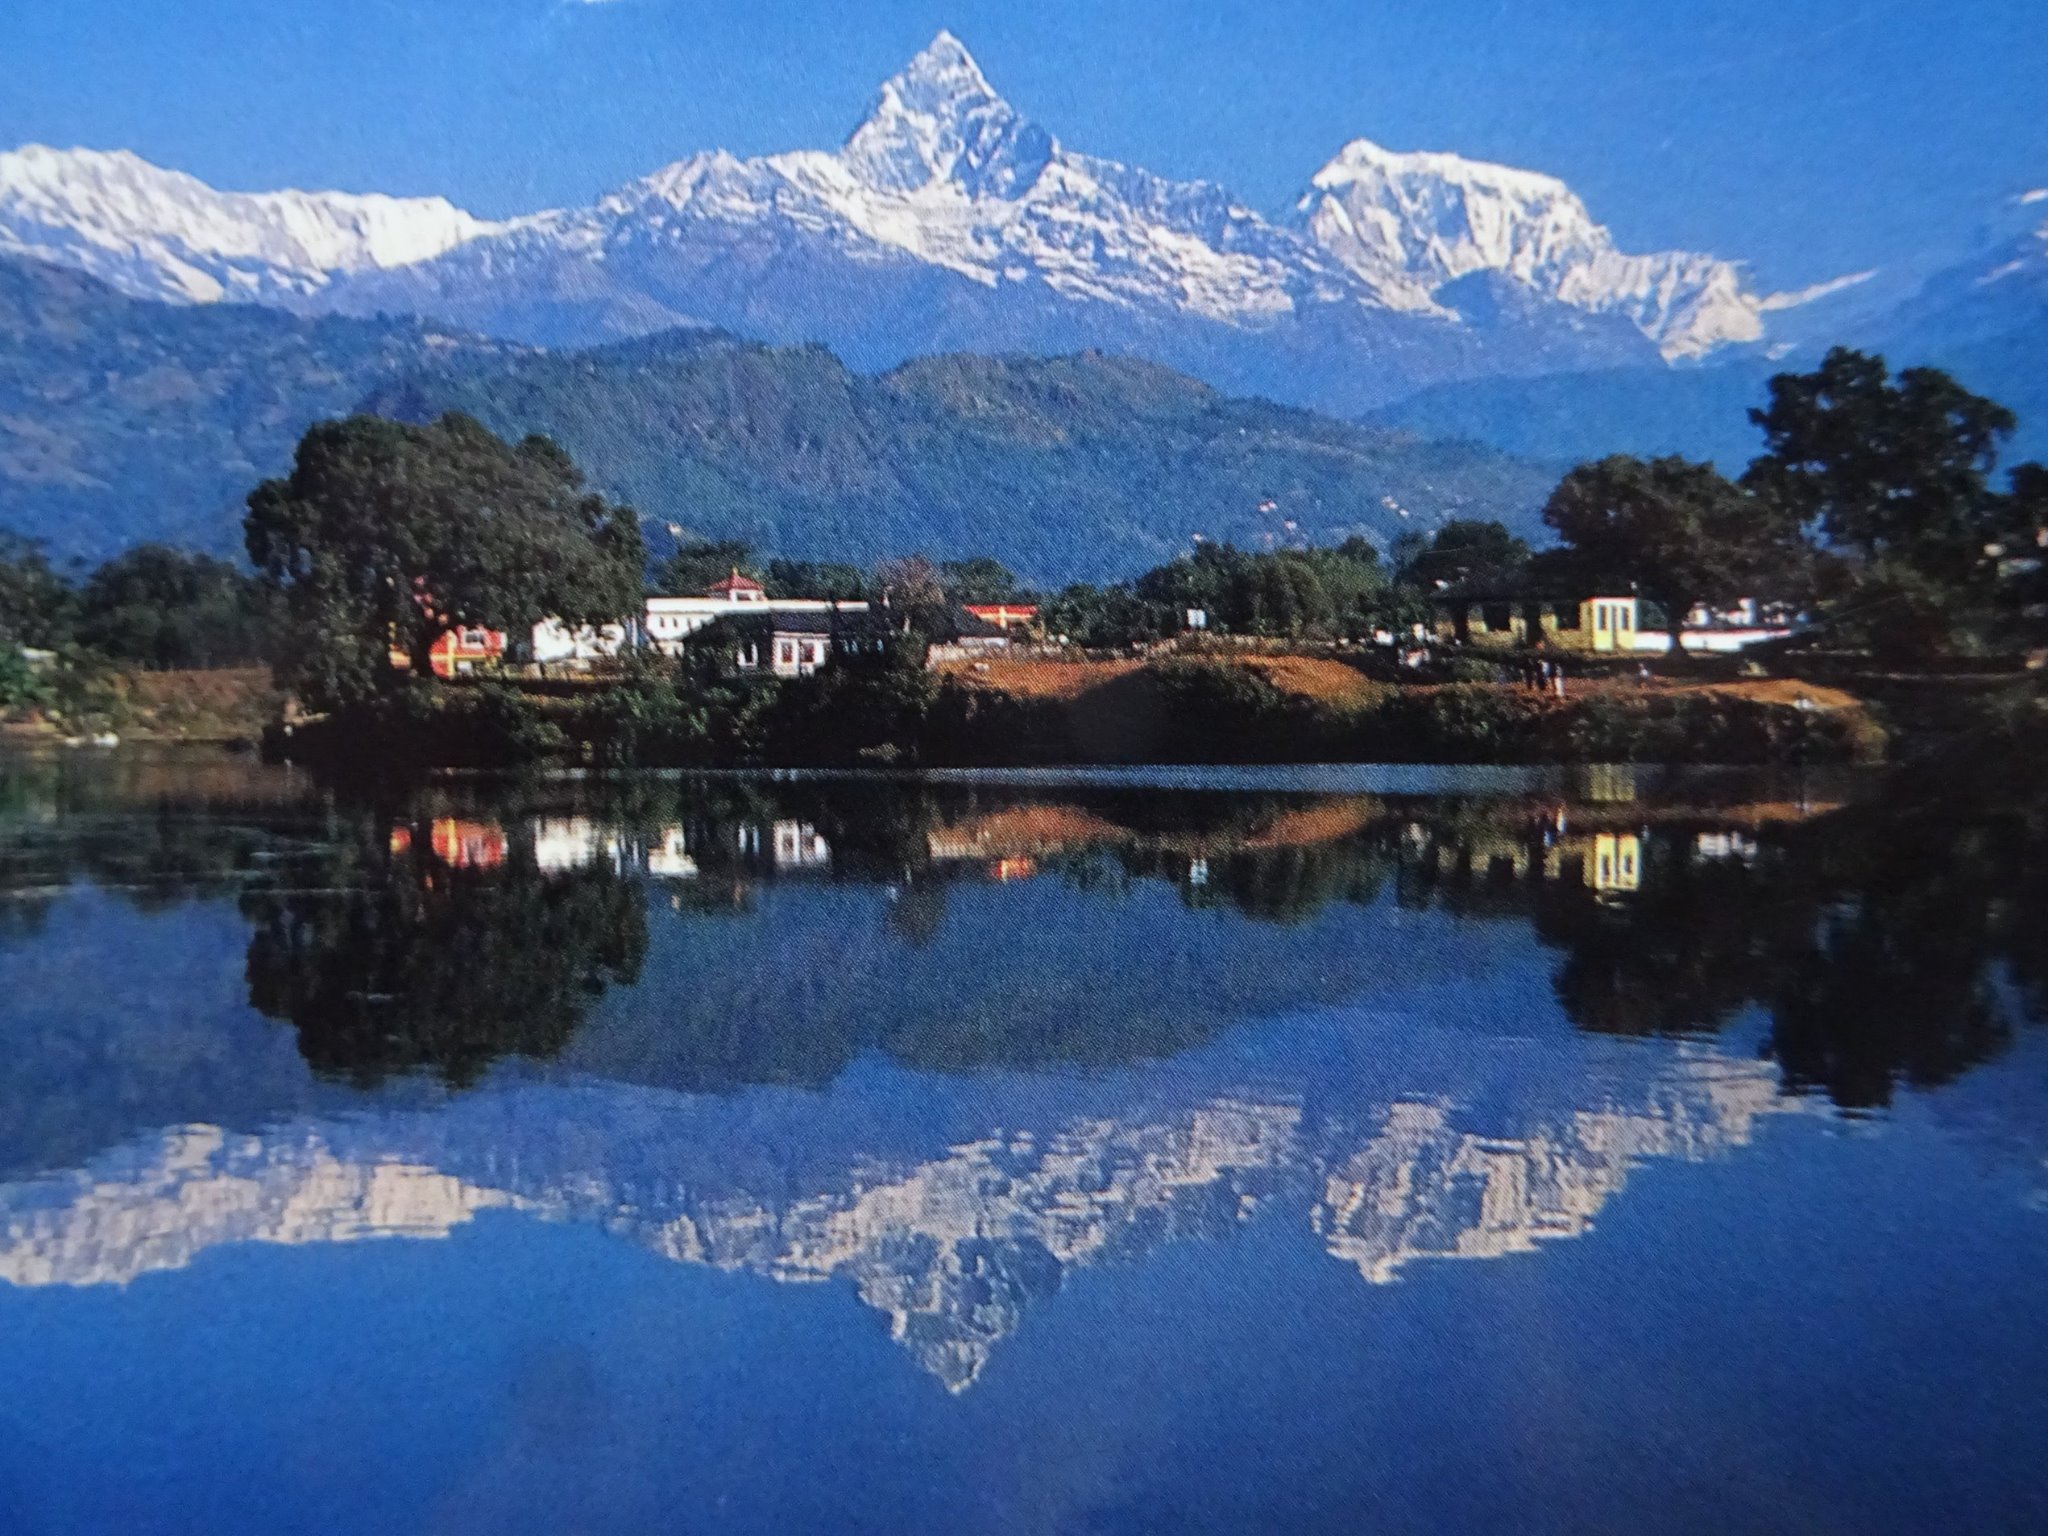 Macchapucchre and Annapurna Himal from Phewa Tal in Pokhara